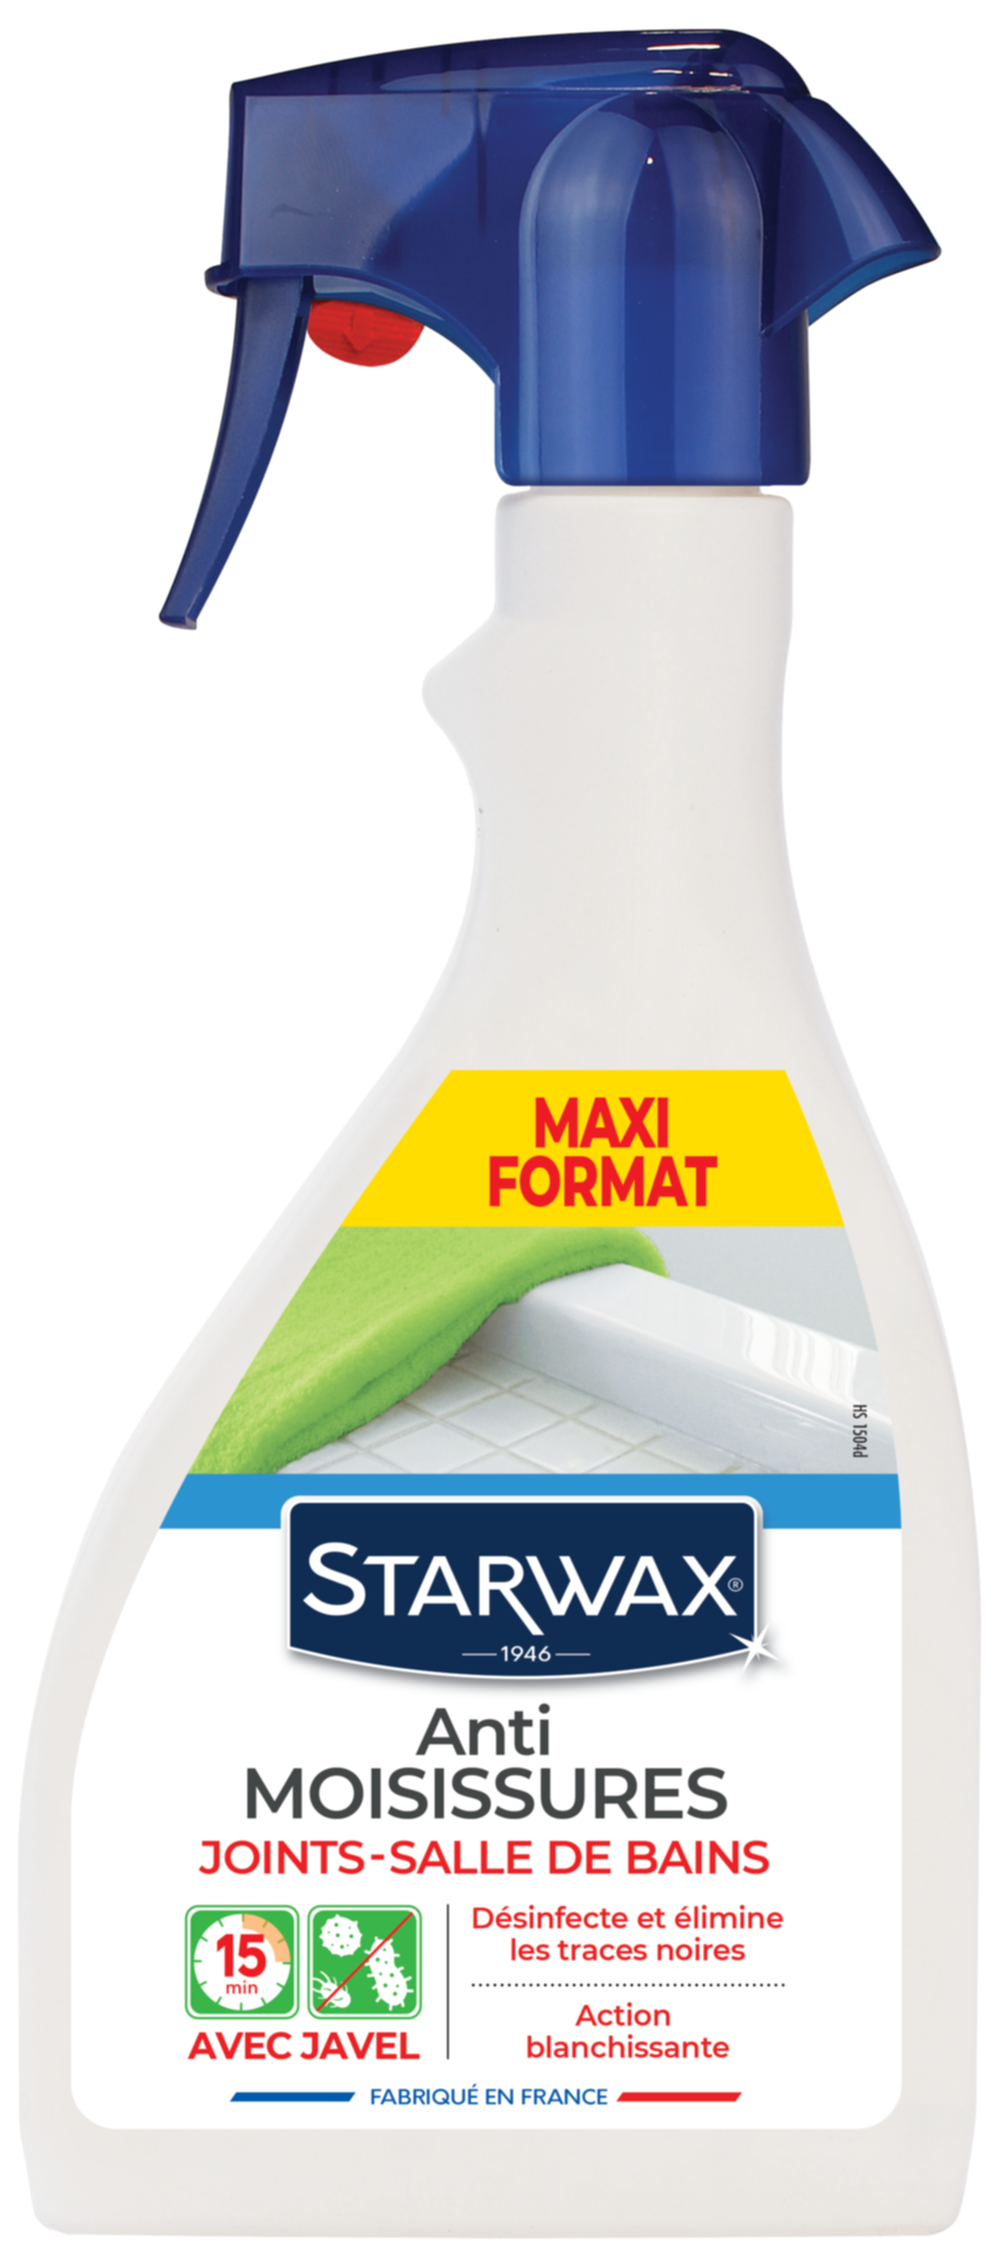 Anti moisissure starwax 